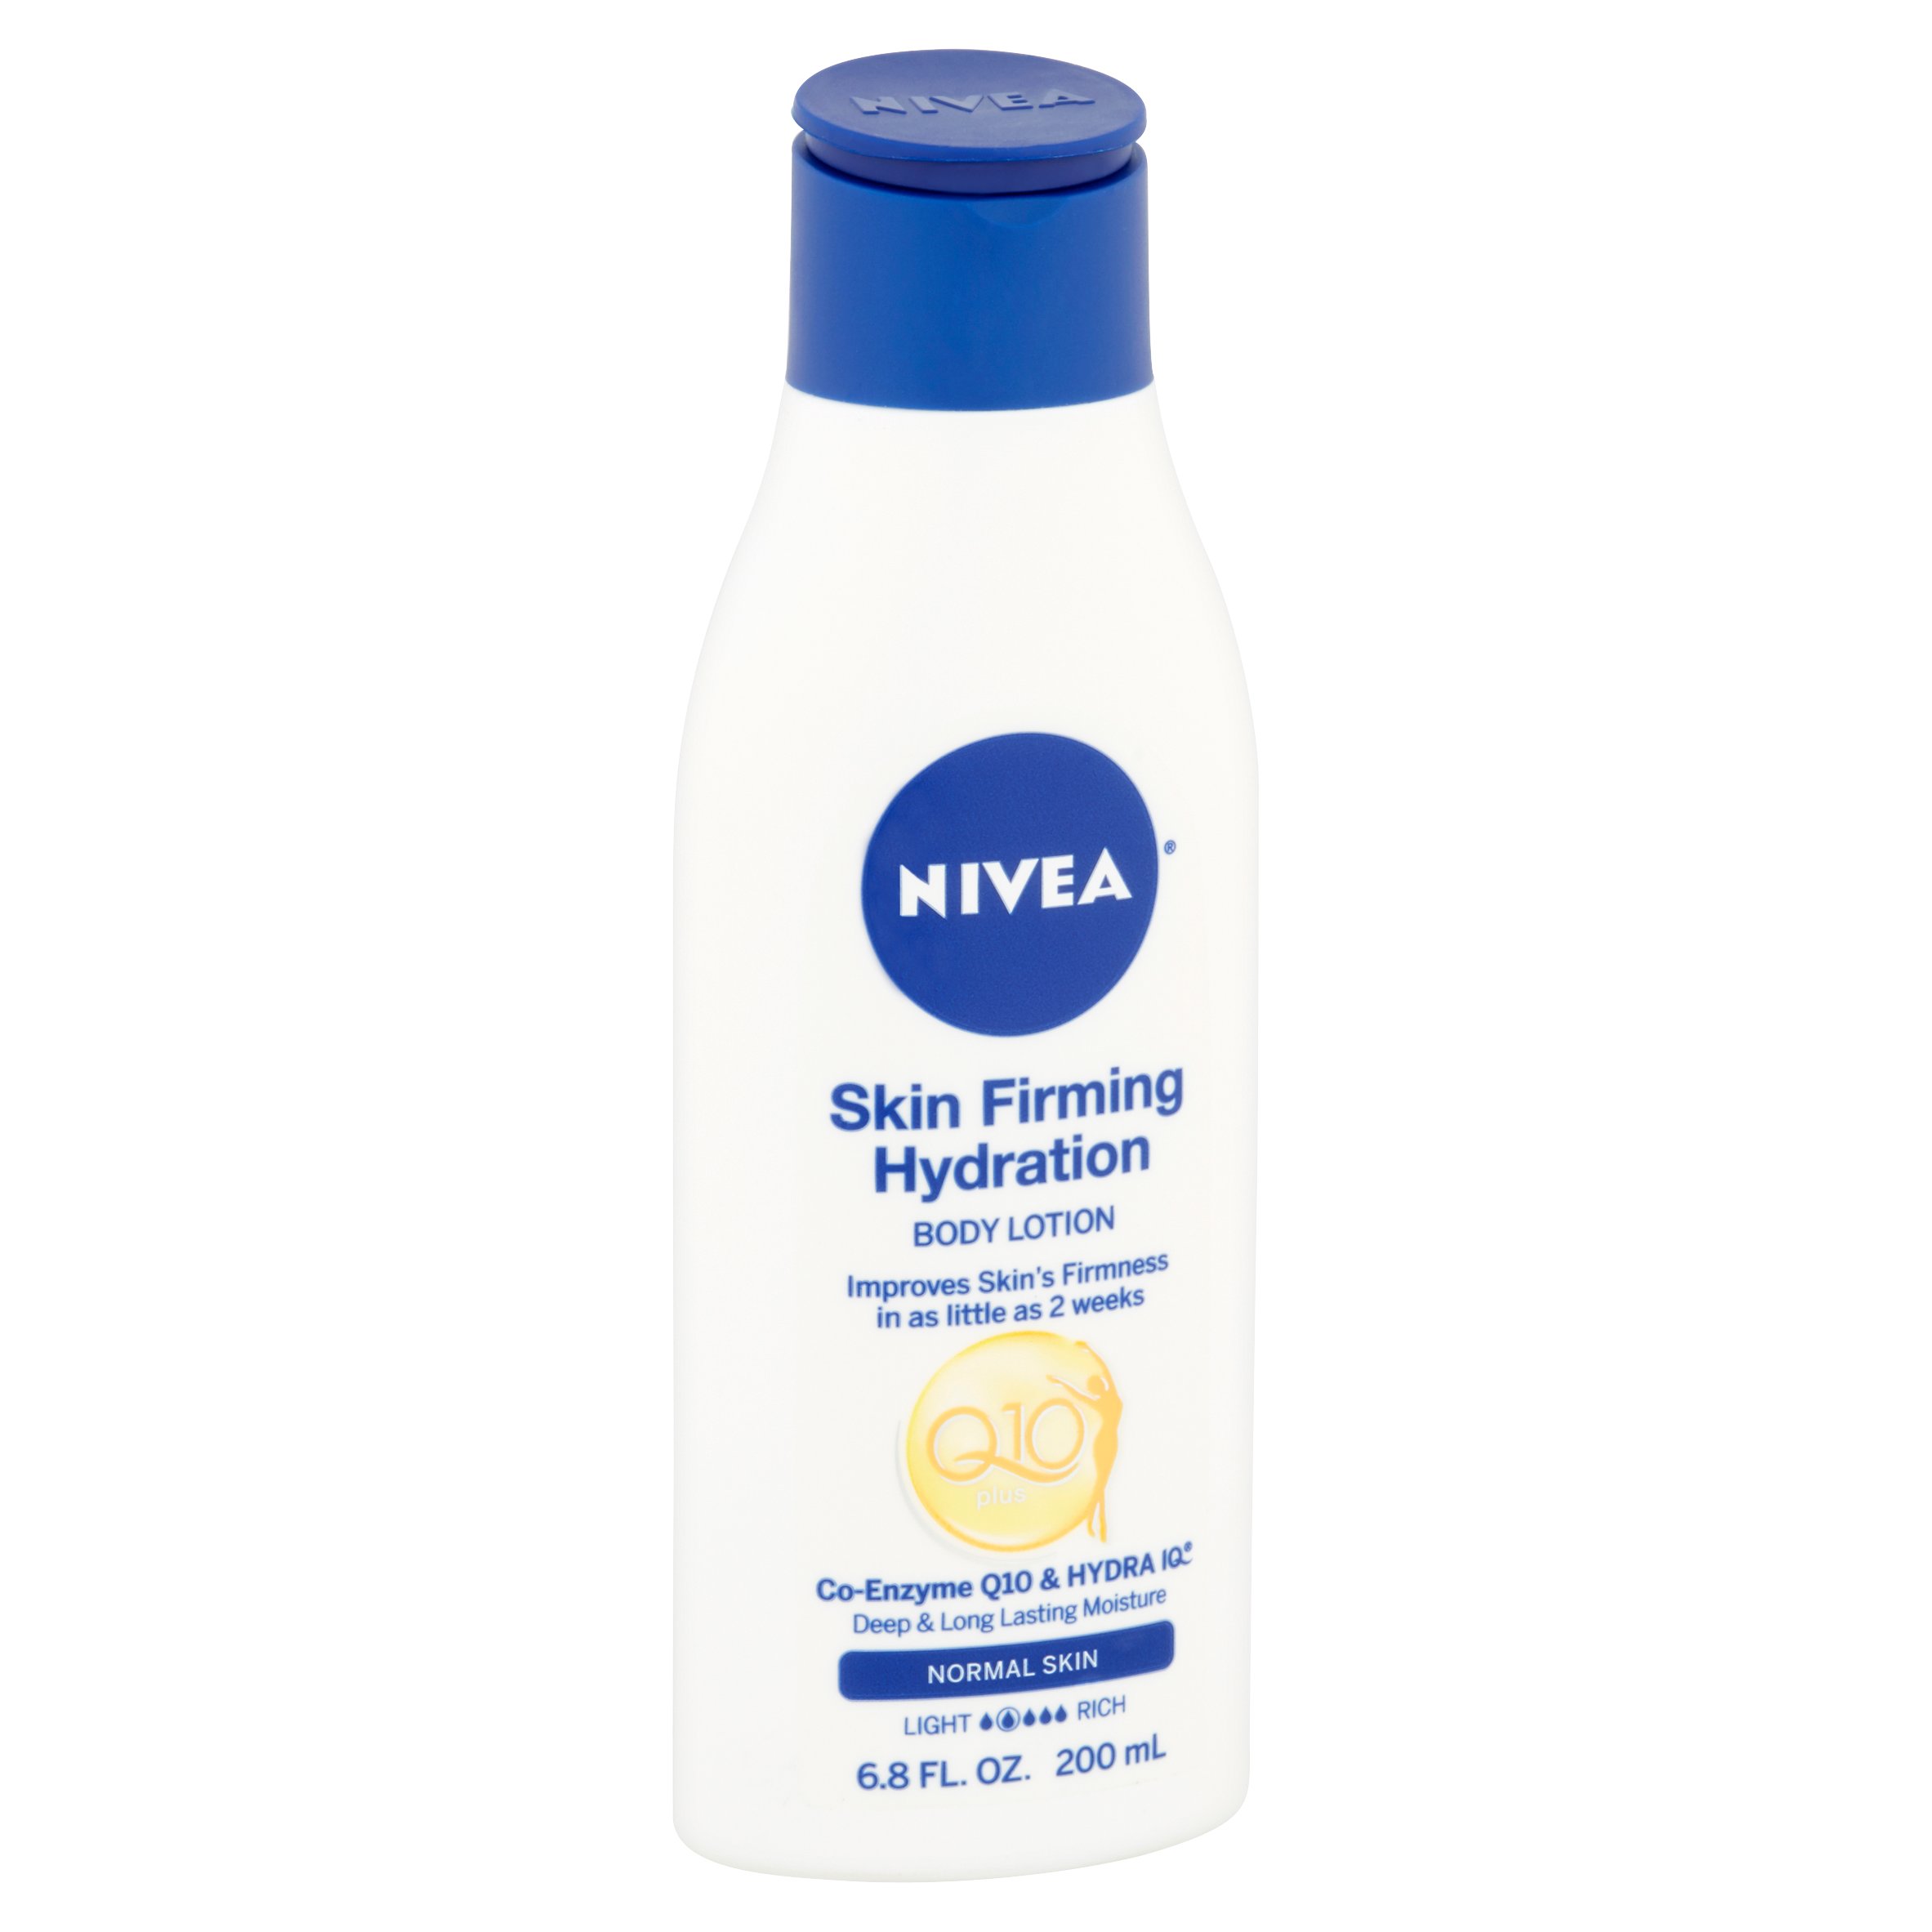 NIVEA Skin Firming Hydration Body Lotion, 6.8 oz - image 2 of 5